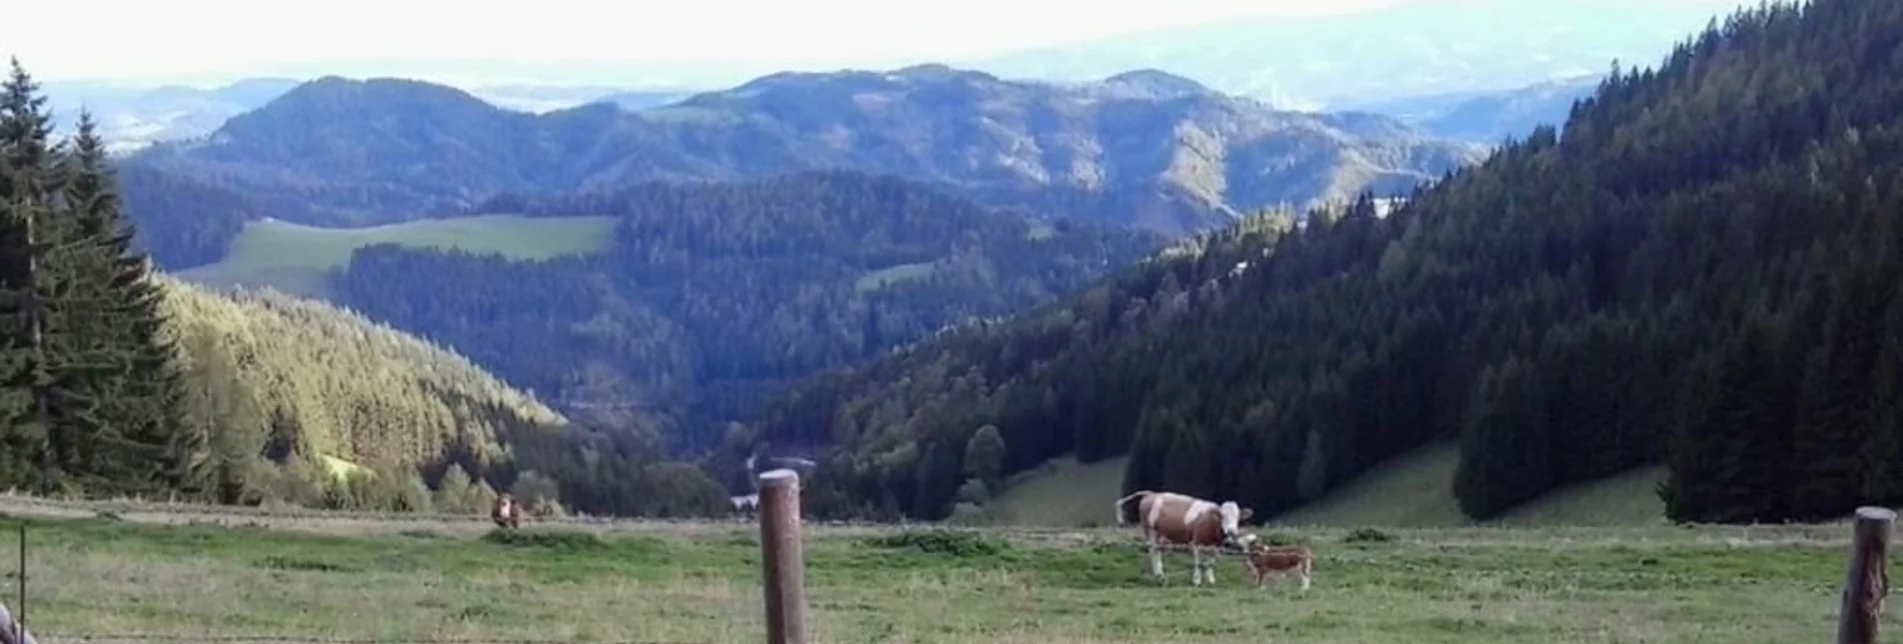 Hiking route Kapitel roundtrip - Touren-Impression #1 | © Region Graz